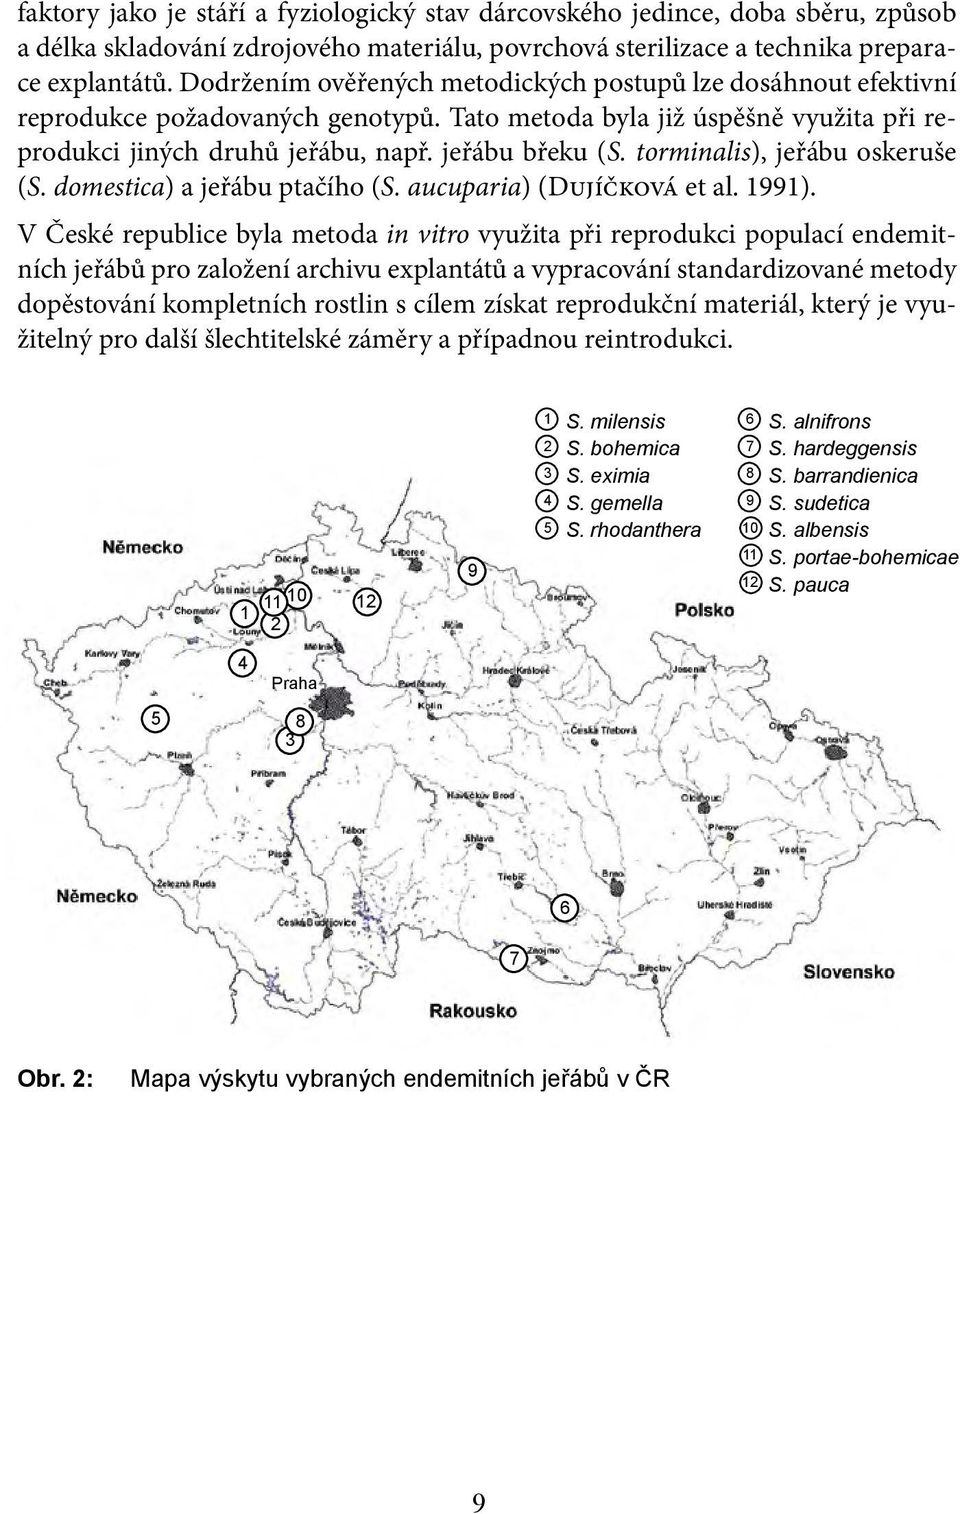 torminalis), jeřábu oskeruše (S. domestica) a jeřábu ptačího (S. aucuparia) (Dujíčková et al. 1991).